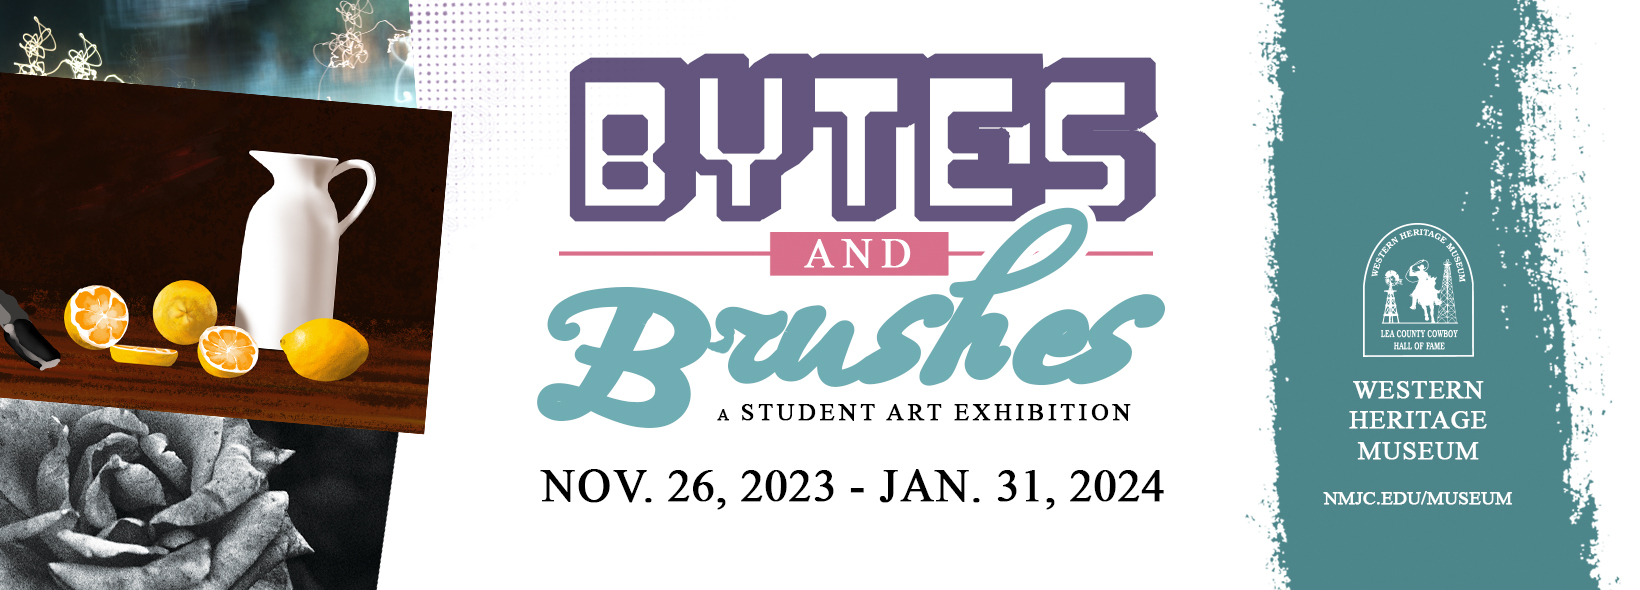 2023 Bytes and Brushes Student Art Exhibit